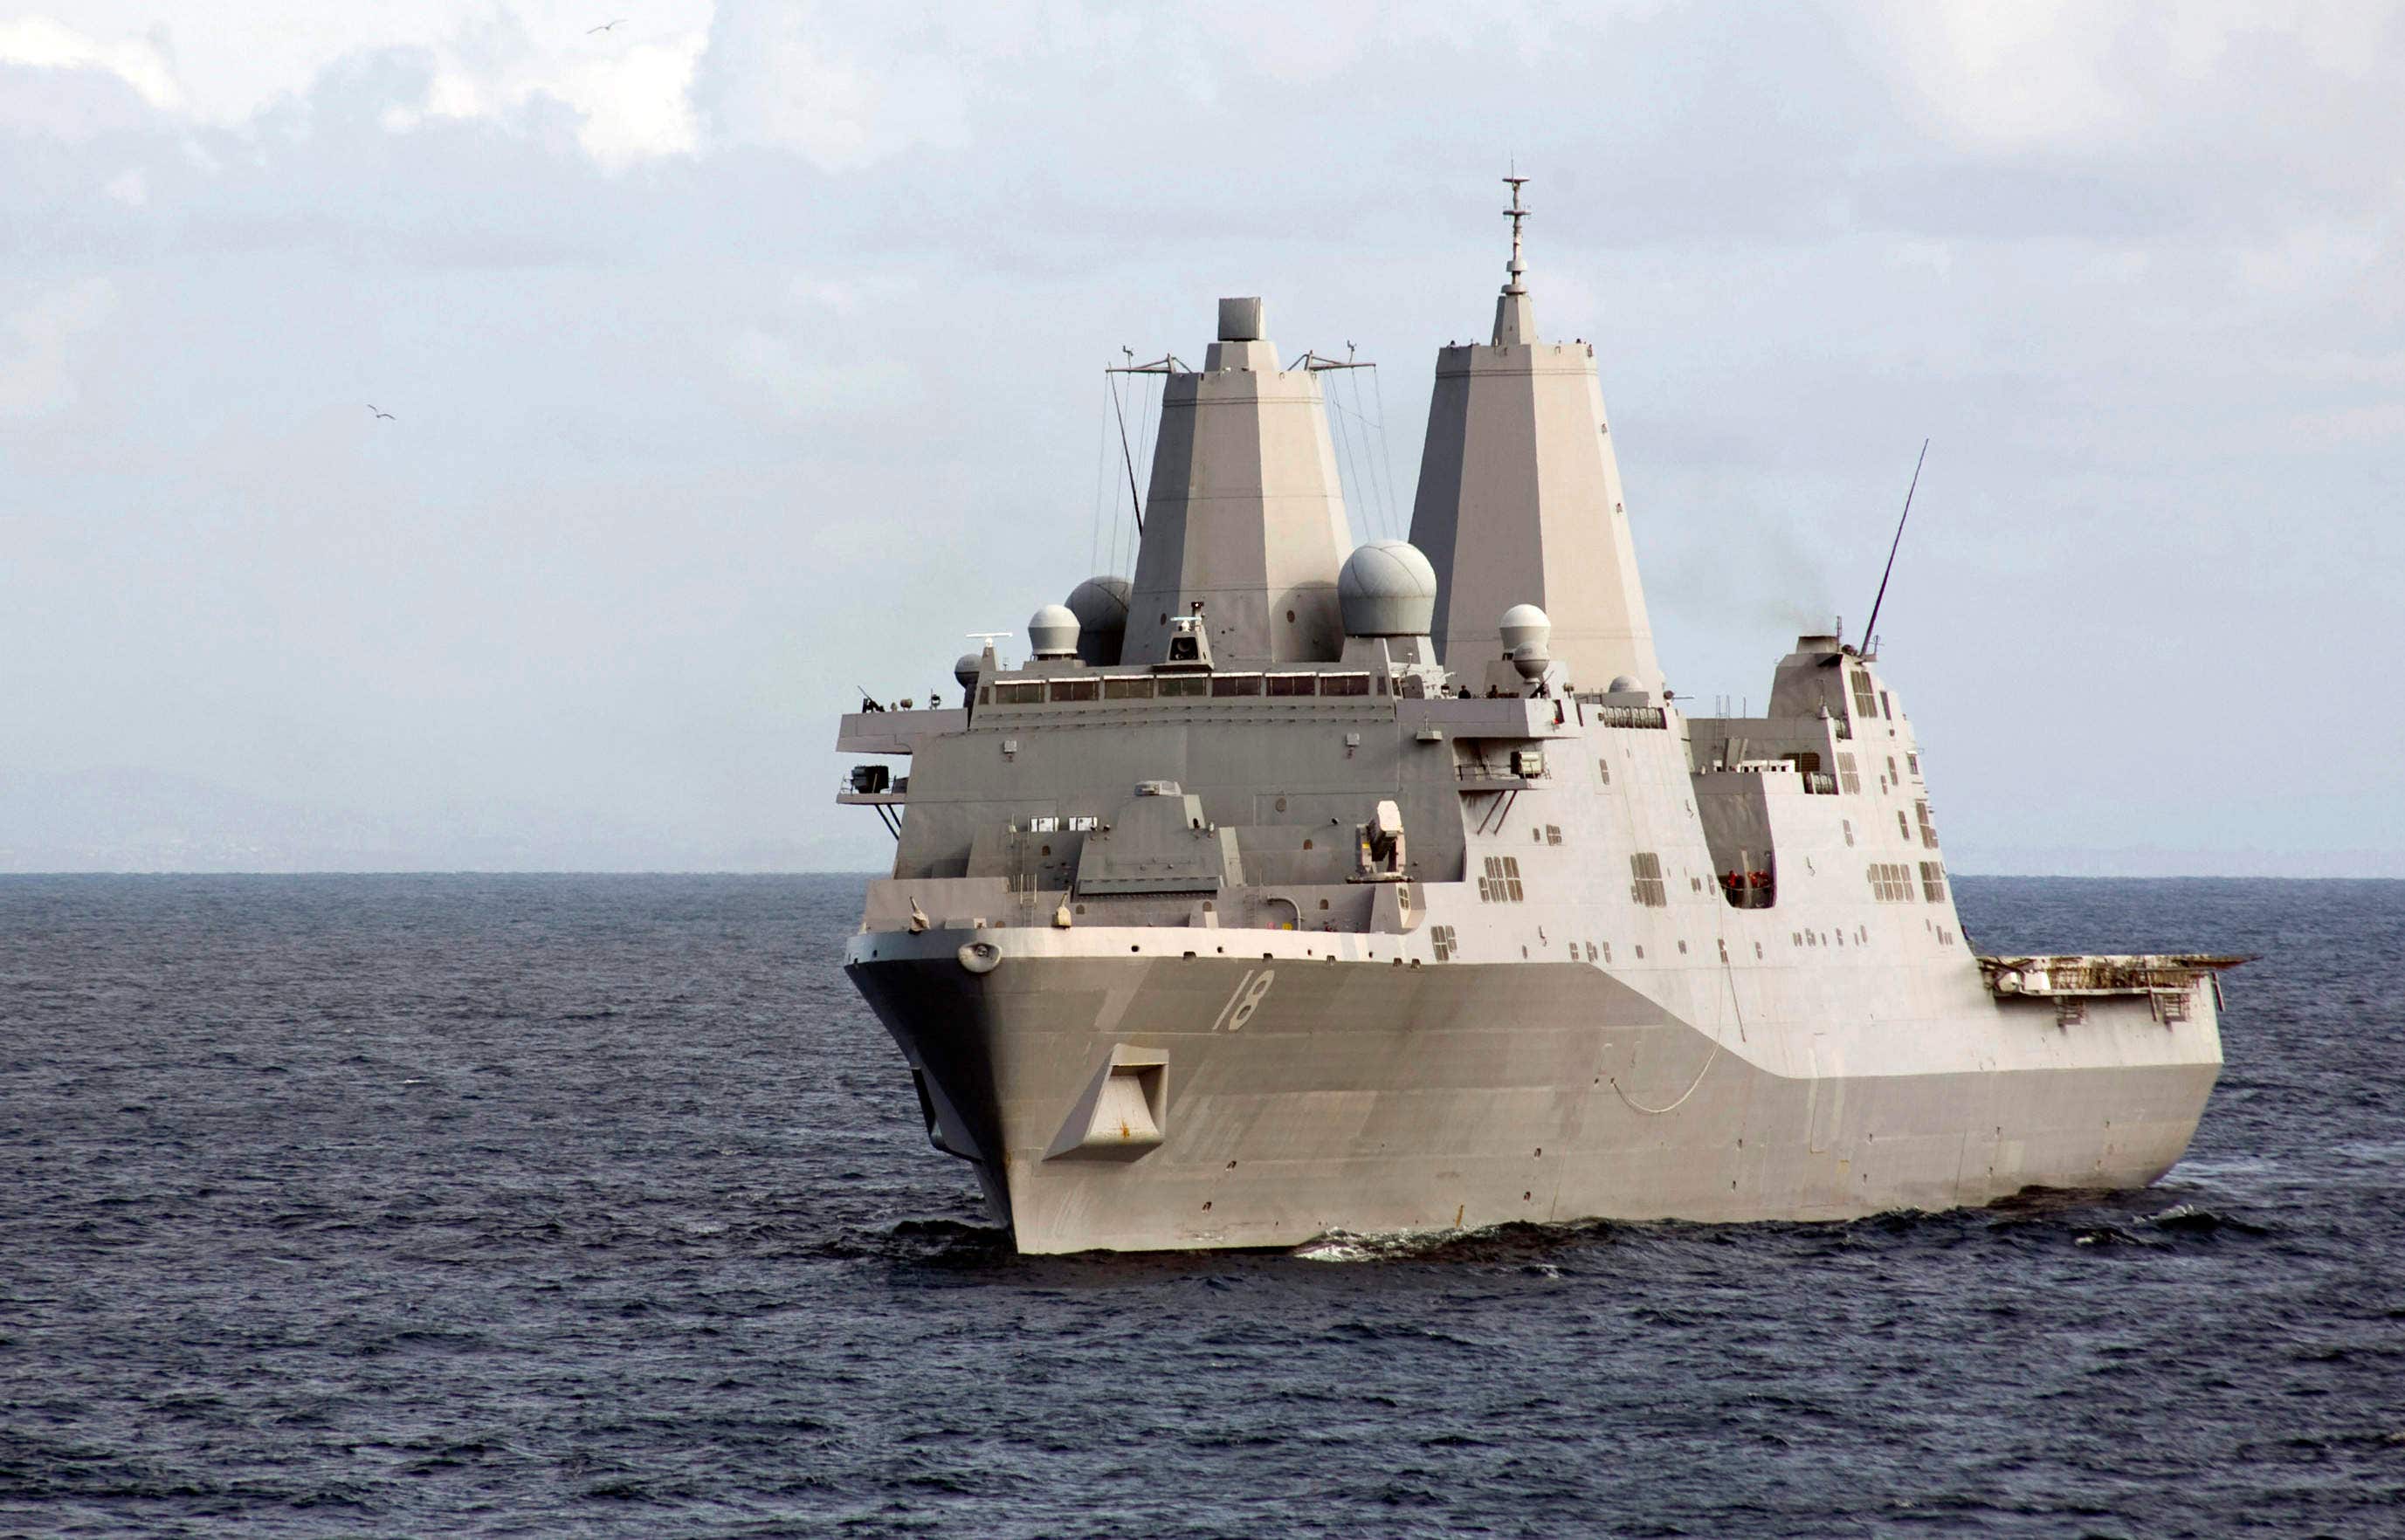 Iranian military boats veer dangerously close to US warship | Fox News